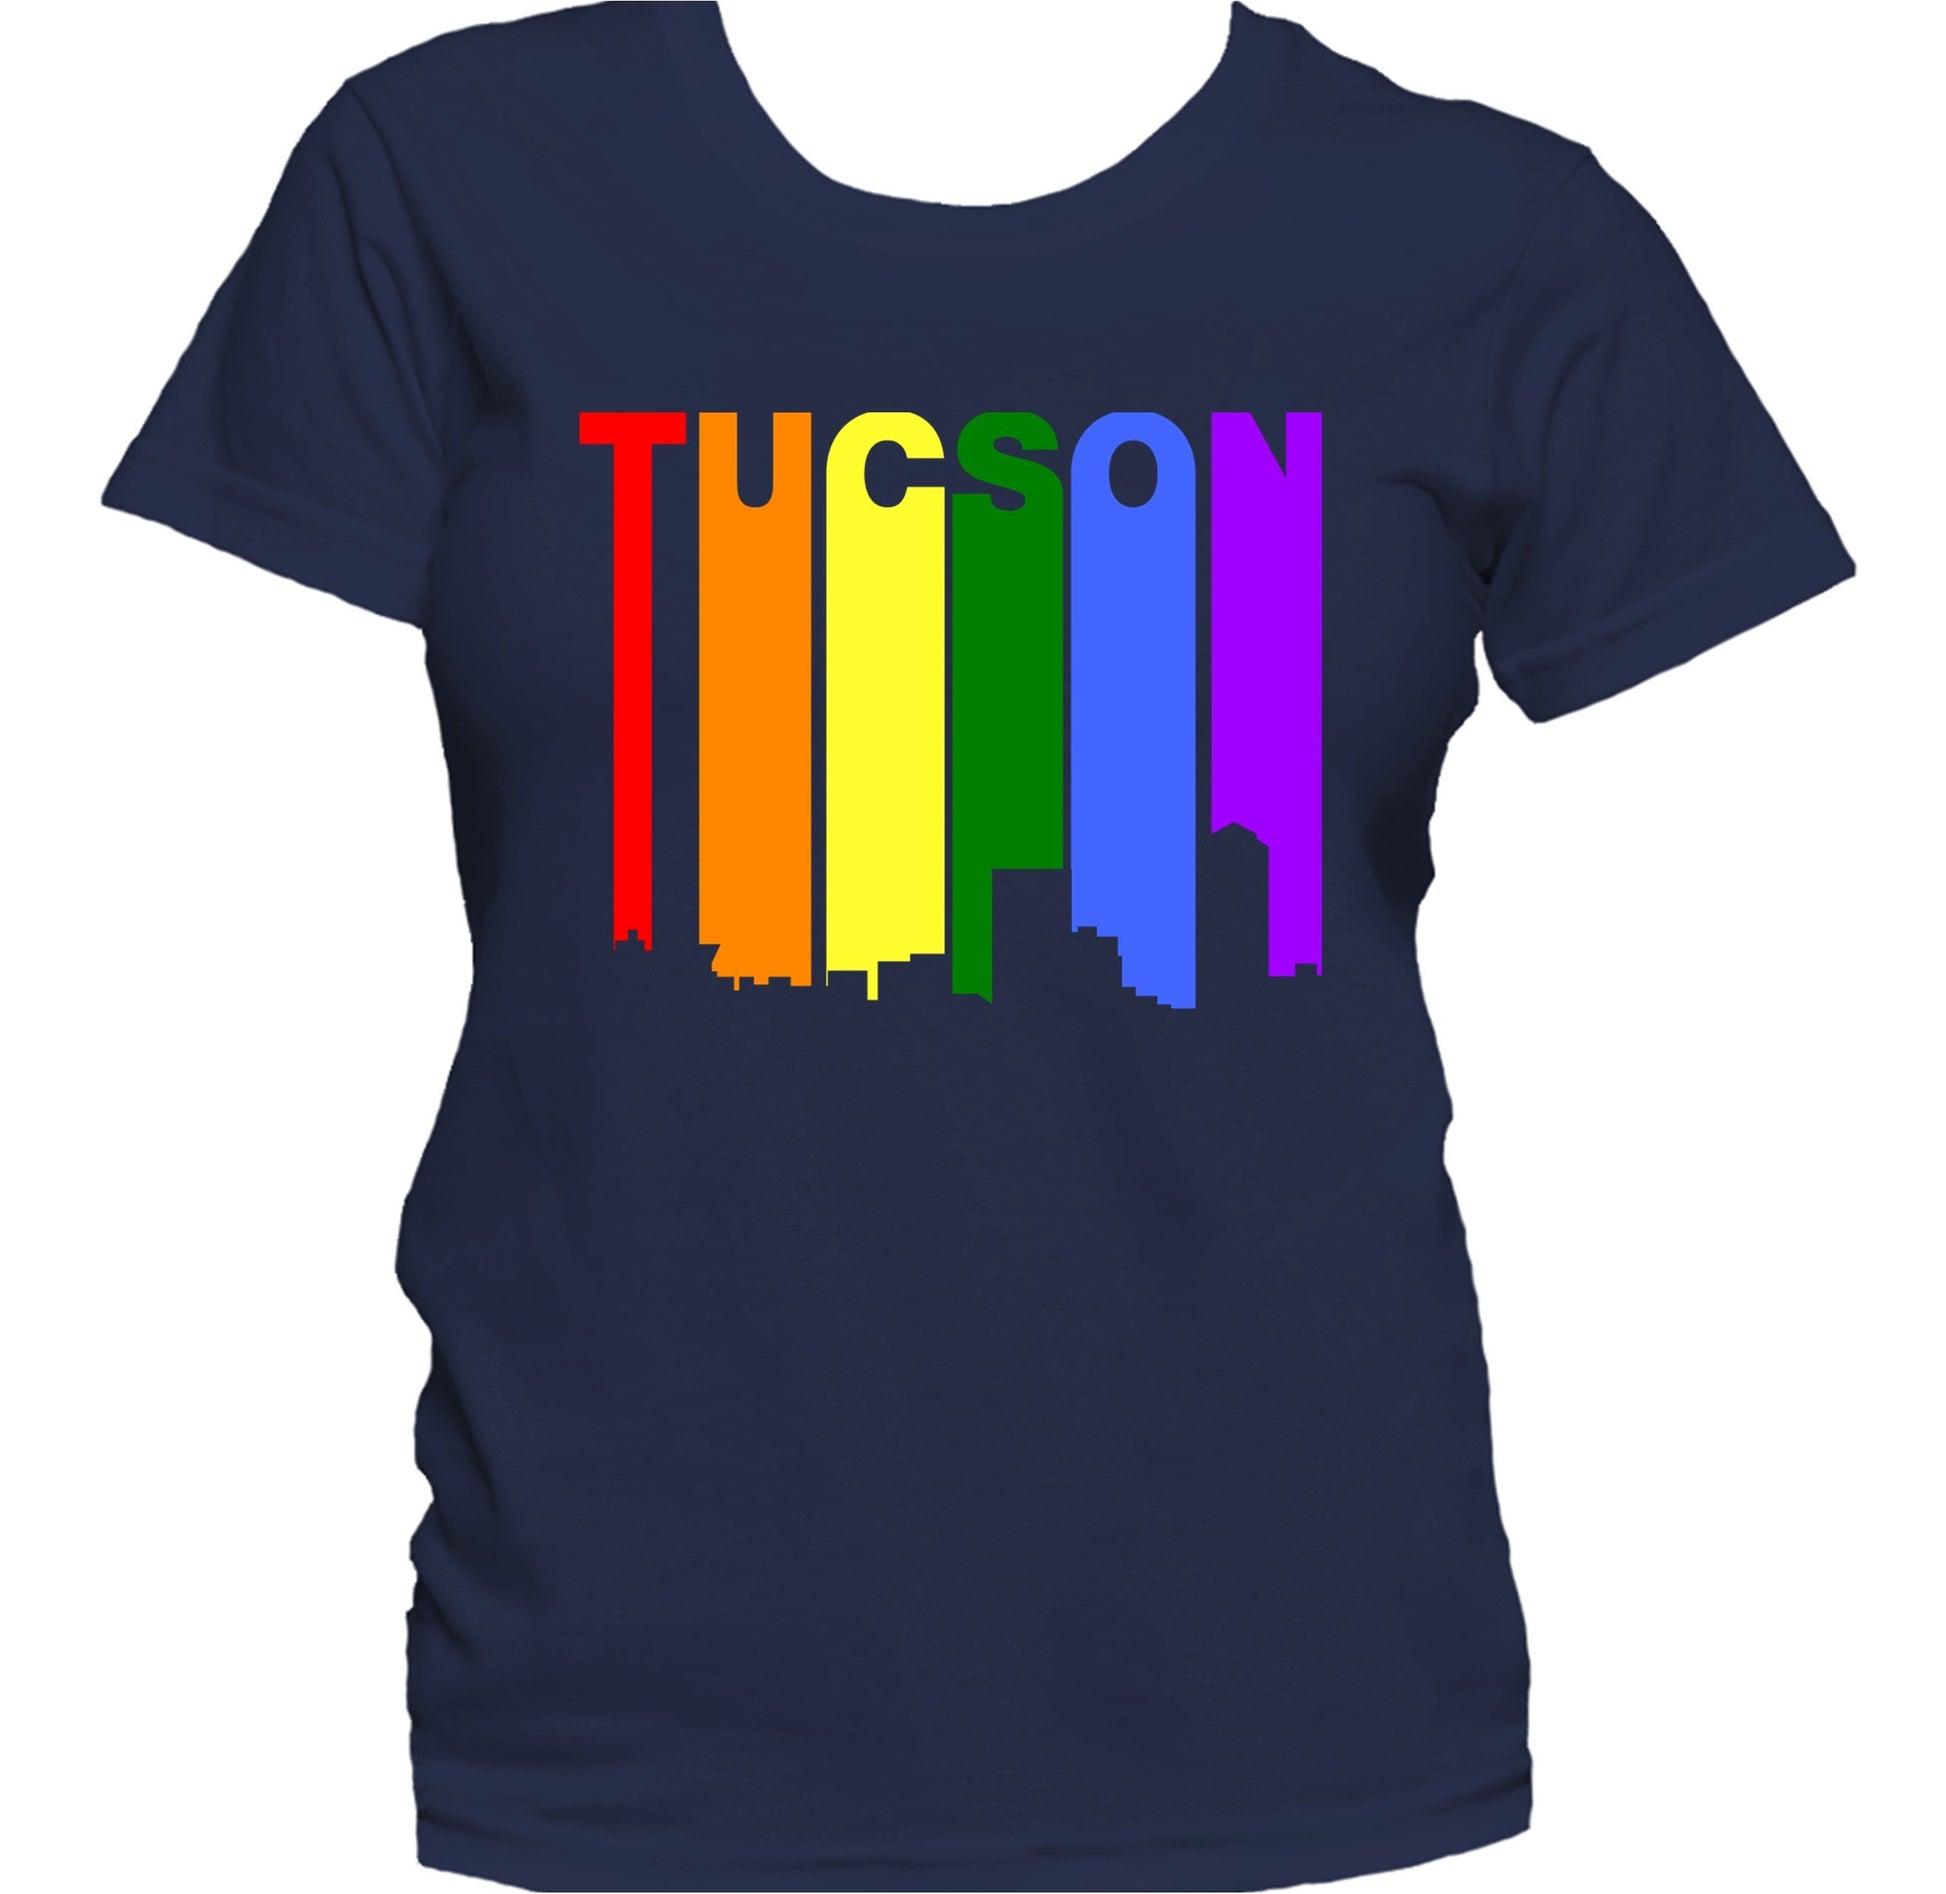 Tucson Arizona LGBTQ Gay Pride Rainbow Skyline Women's T-Shirt